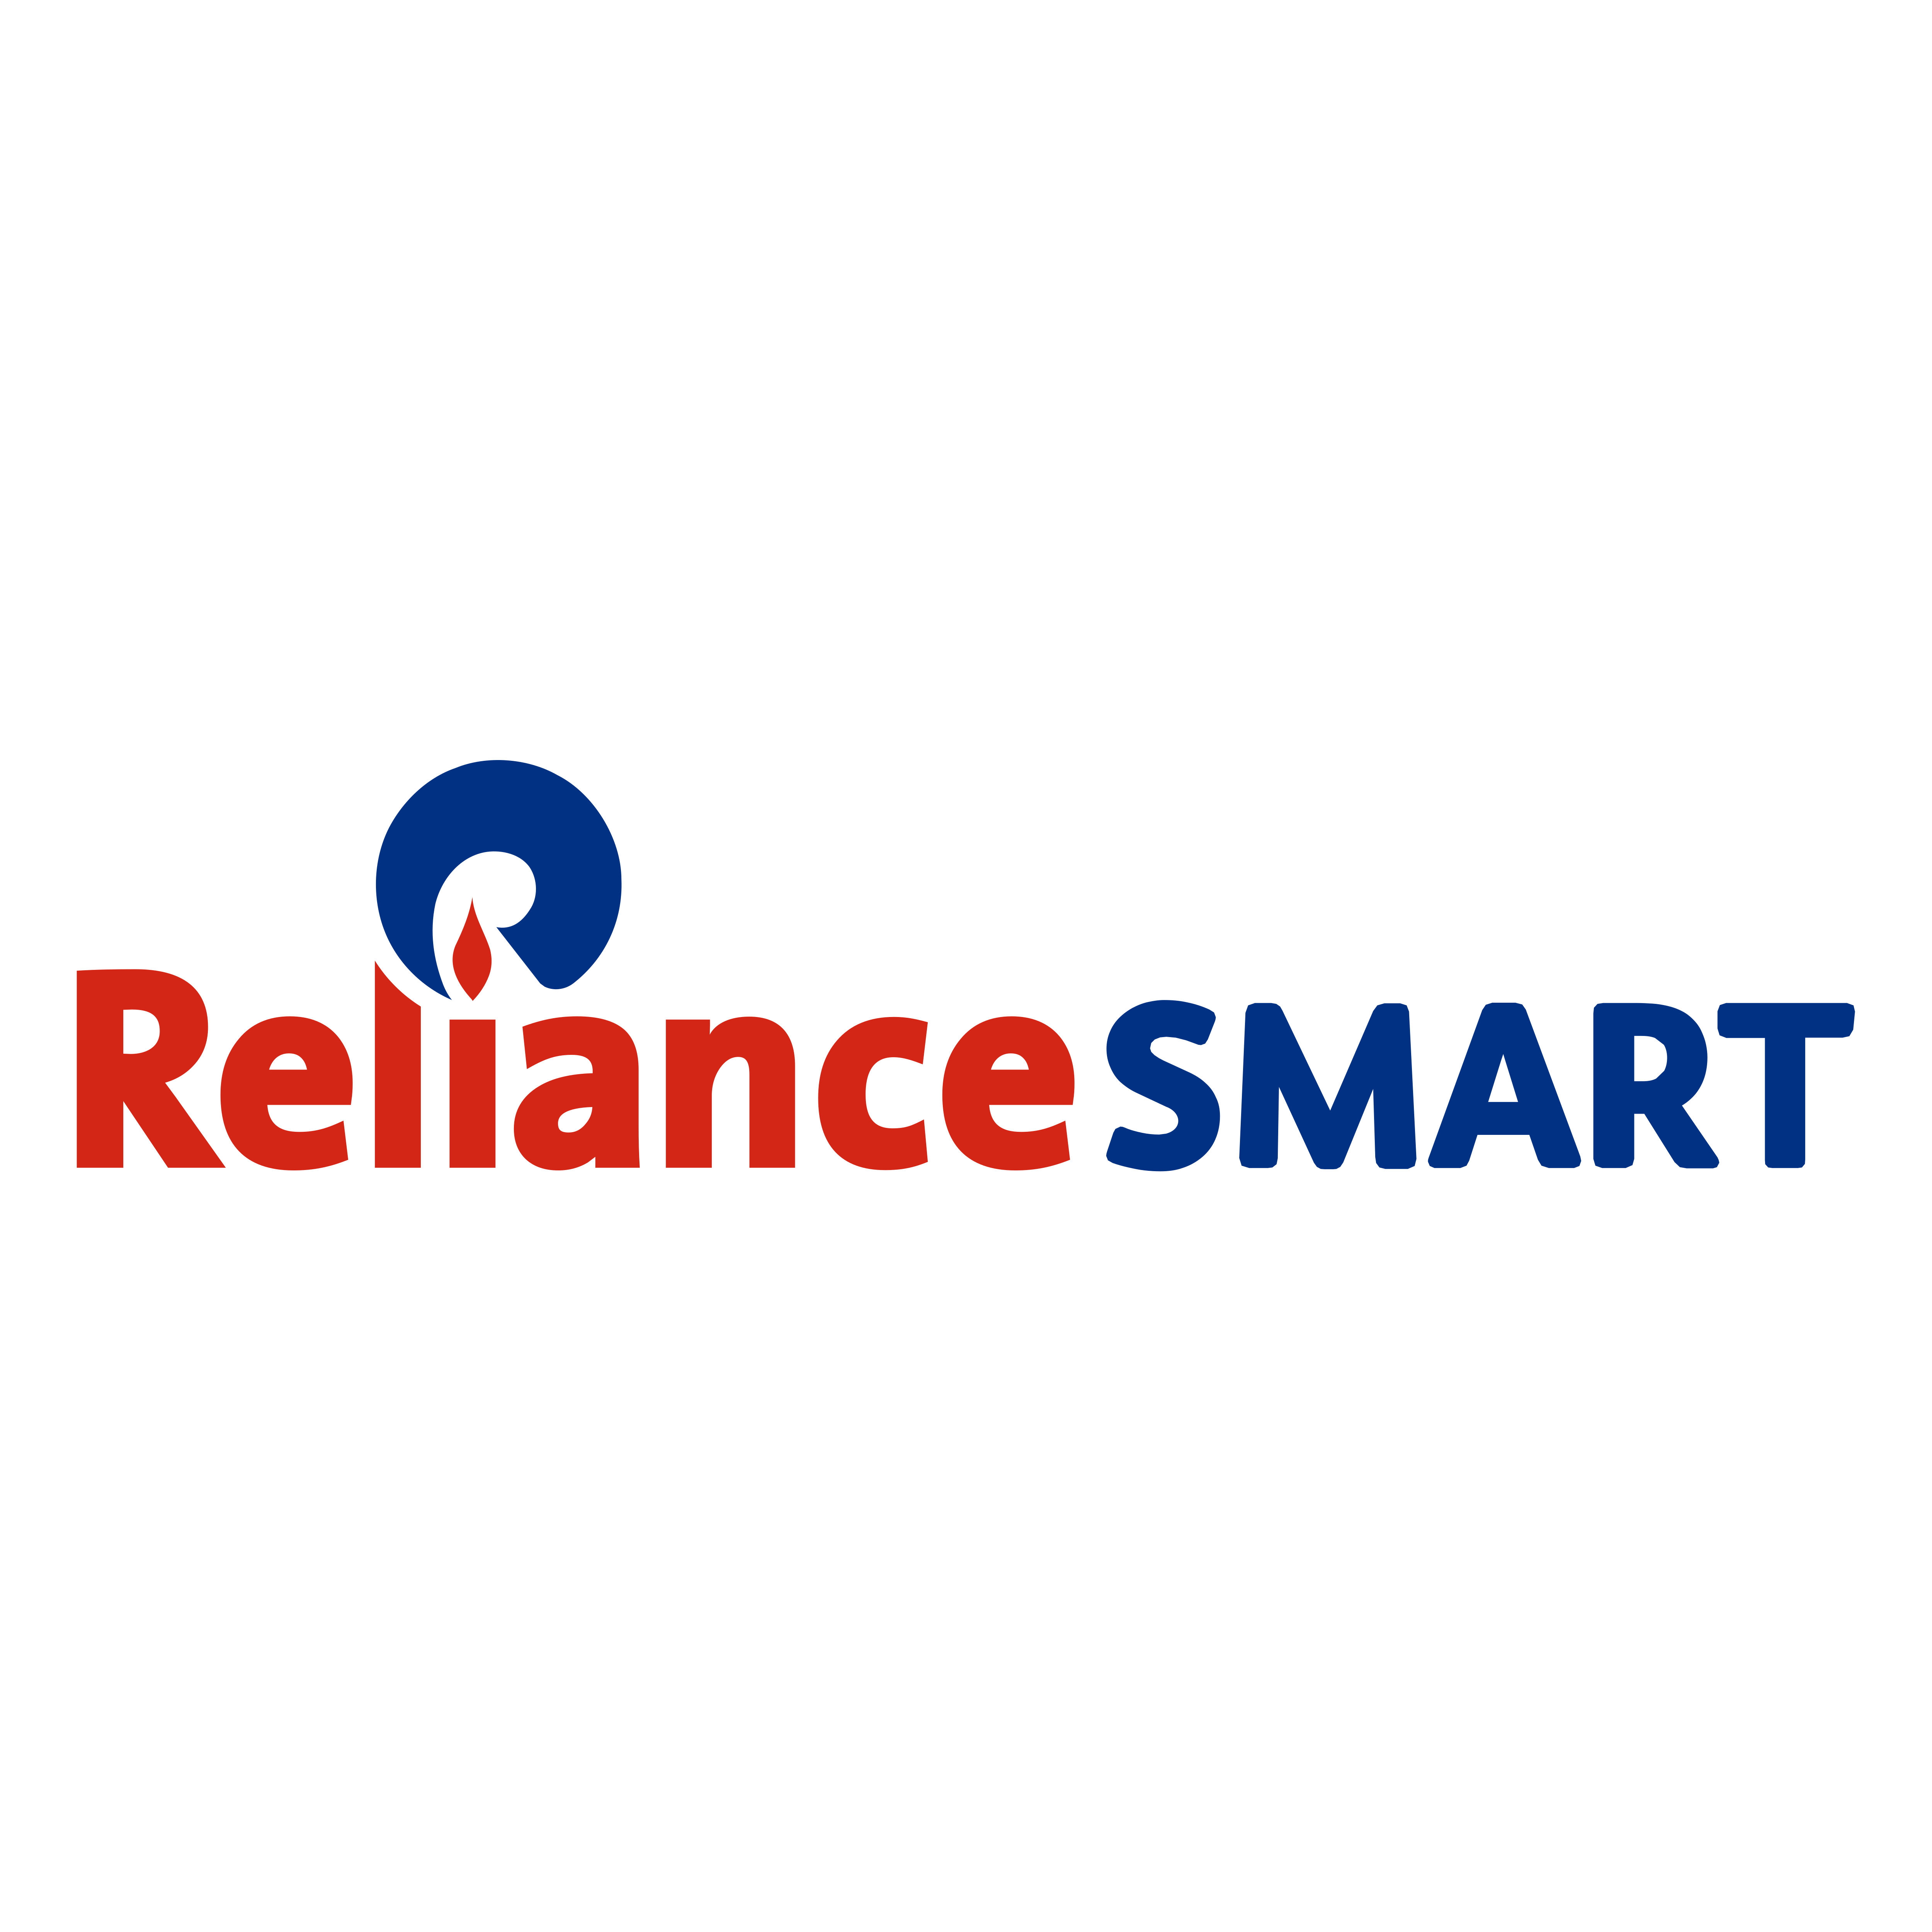 Reliance Smart Logo Transparent Image